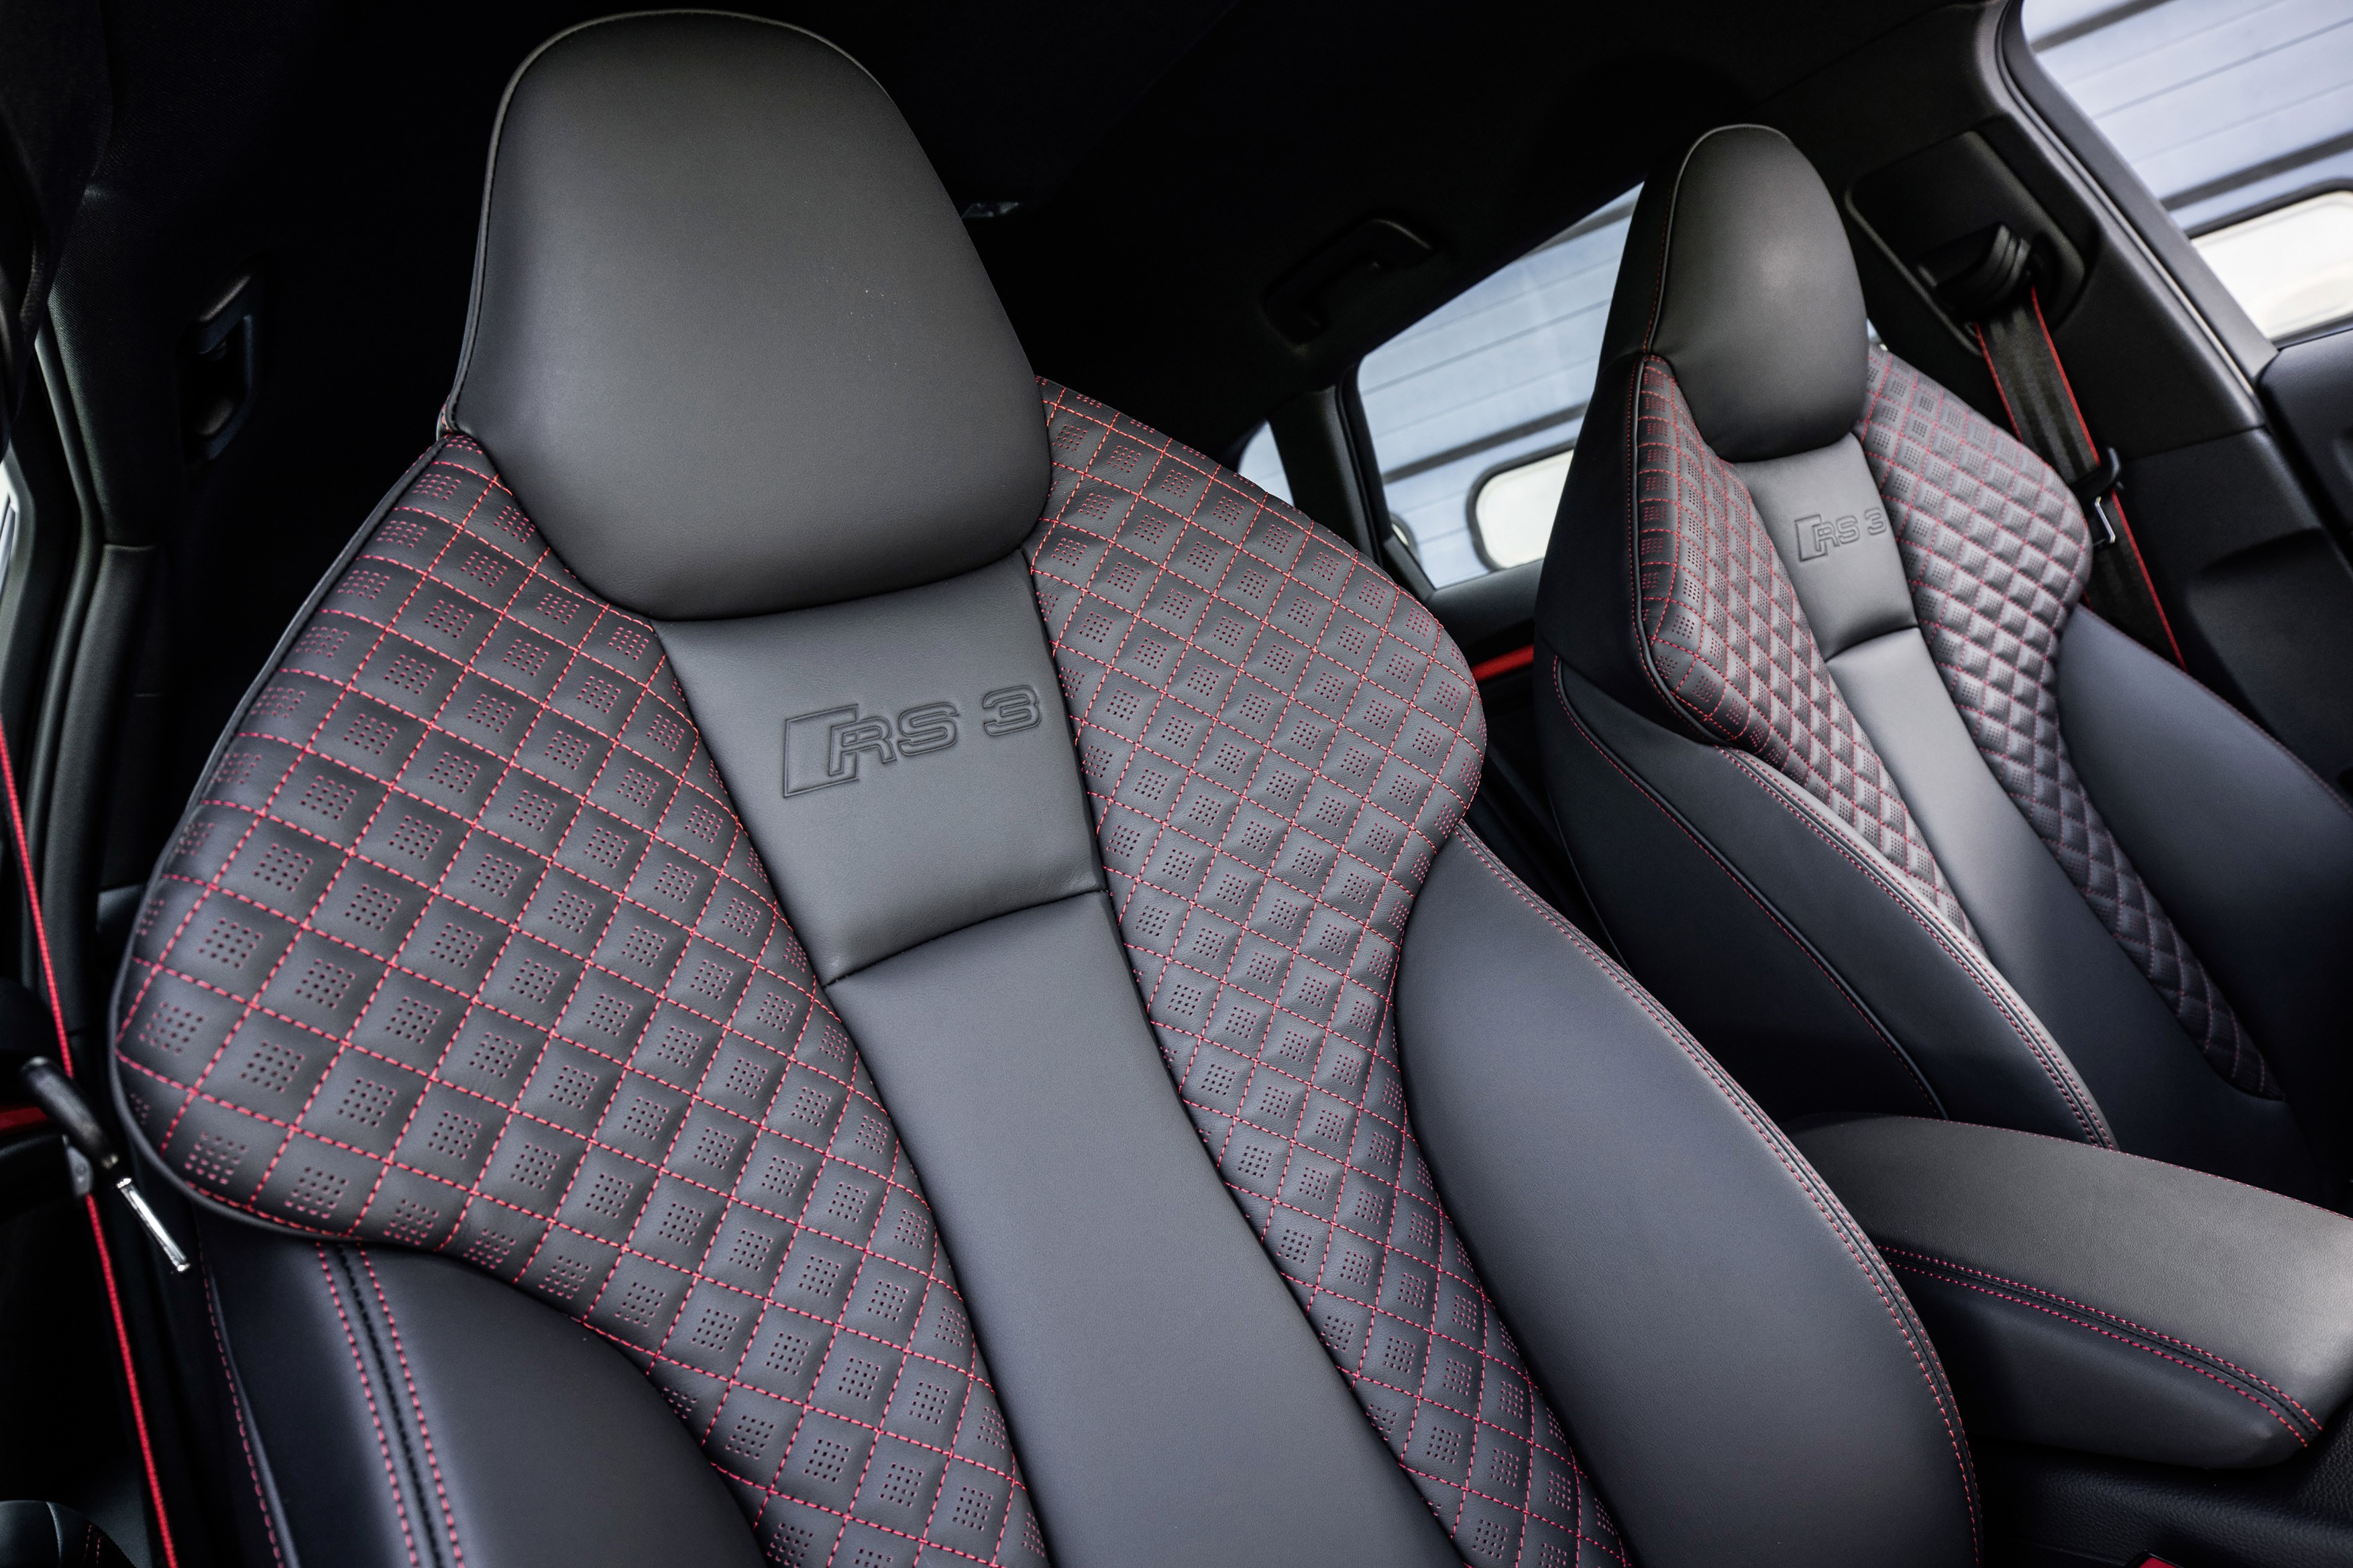 New 2015 Audi Rs3 Photos Show Nardo Grey Catalunya Red And